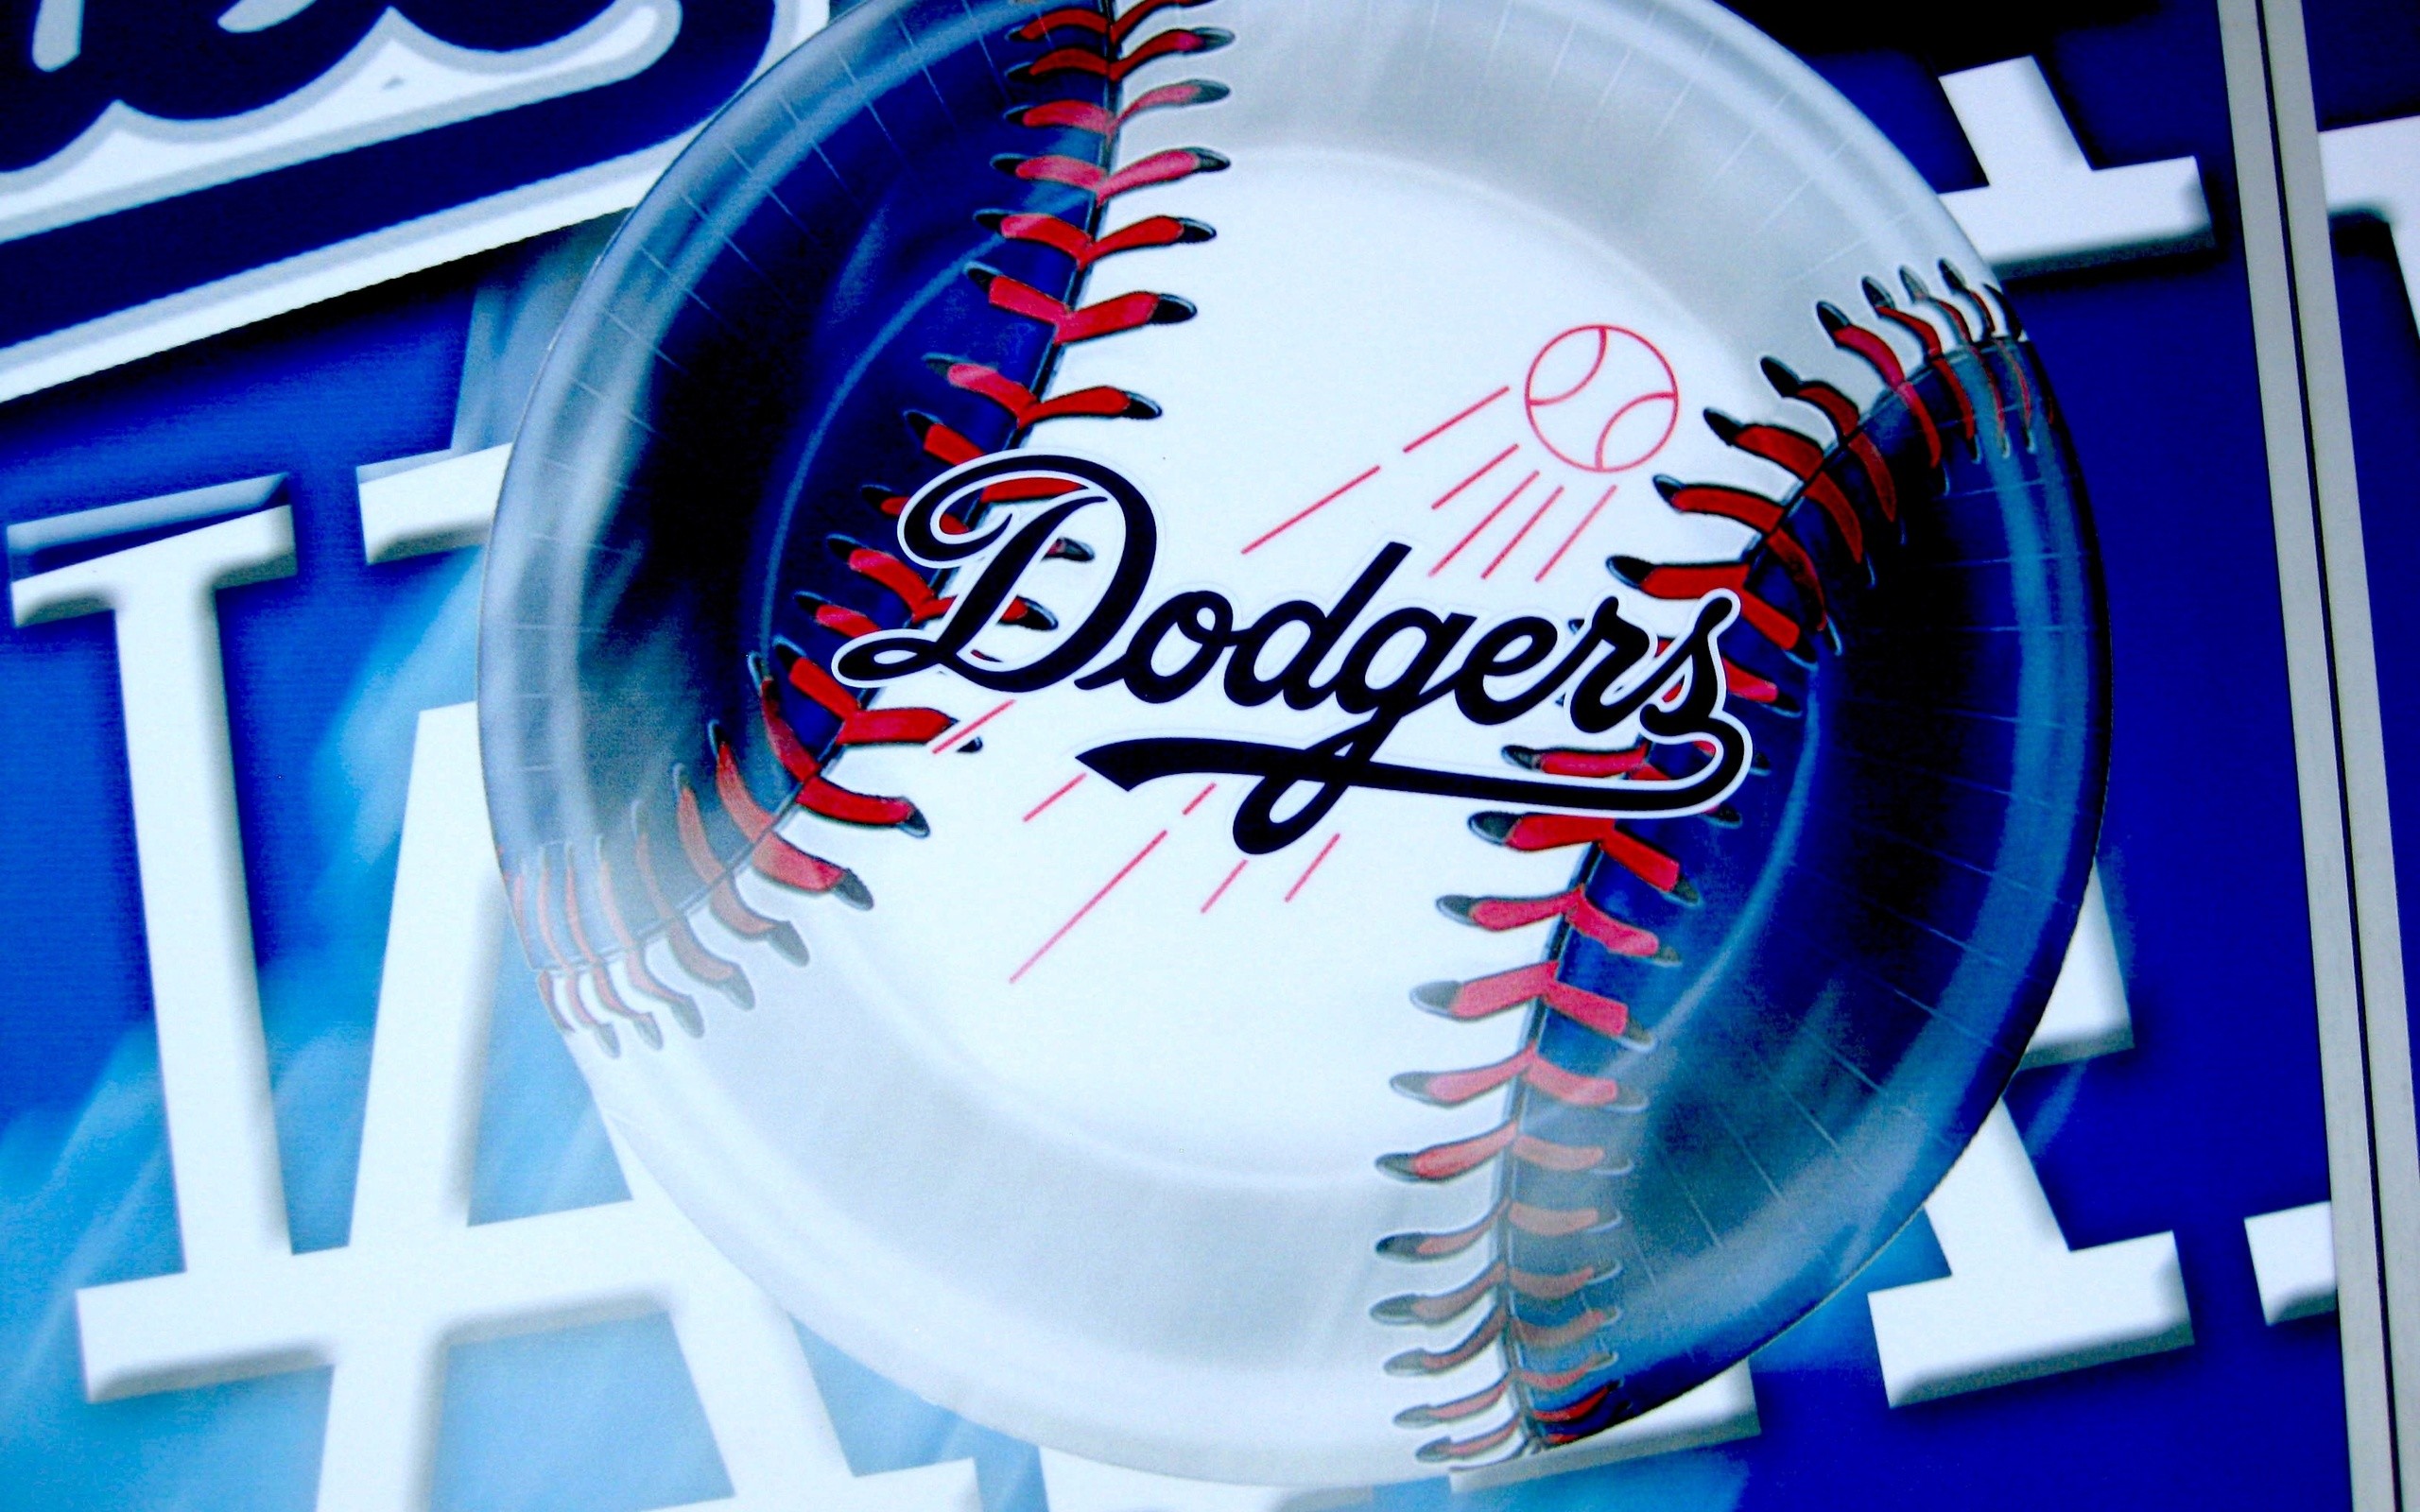 Los angeles dodgers. La Dodgers. Доджерс логотип. Лос Анджелес Доджерс лого.